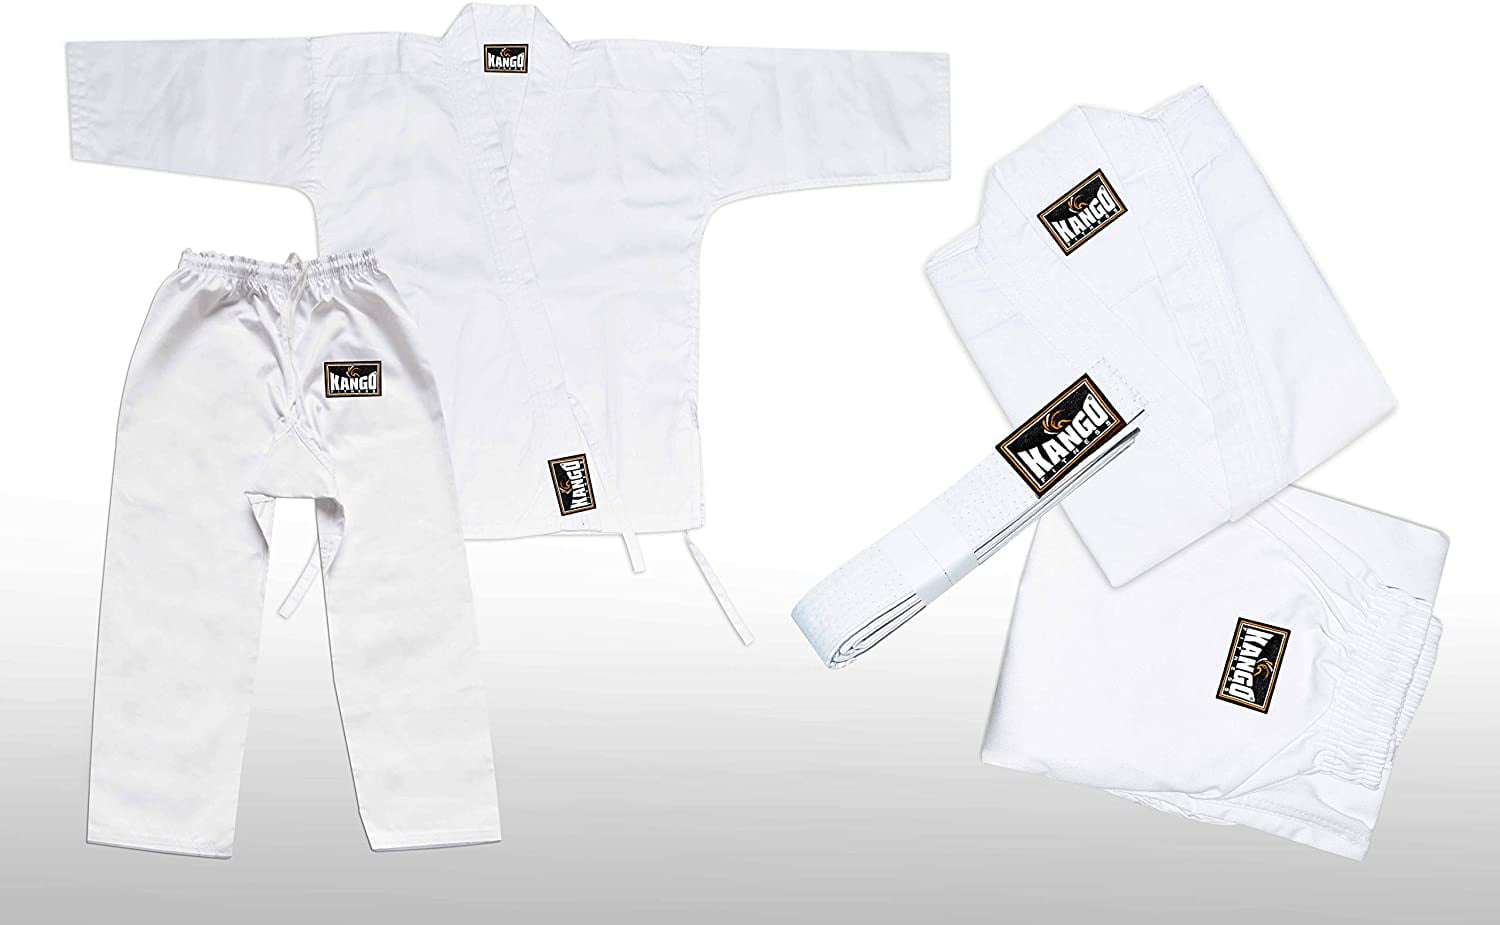 Malino Student Karate Gi Kids Men Suit Uniform Free Belt Cotton 8oz White/Black 